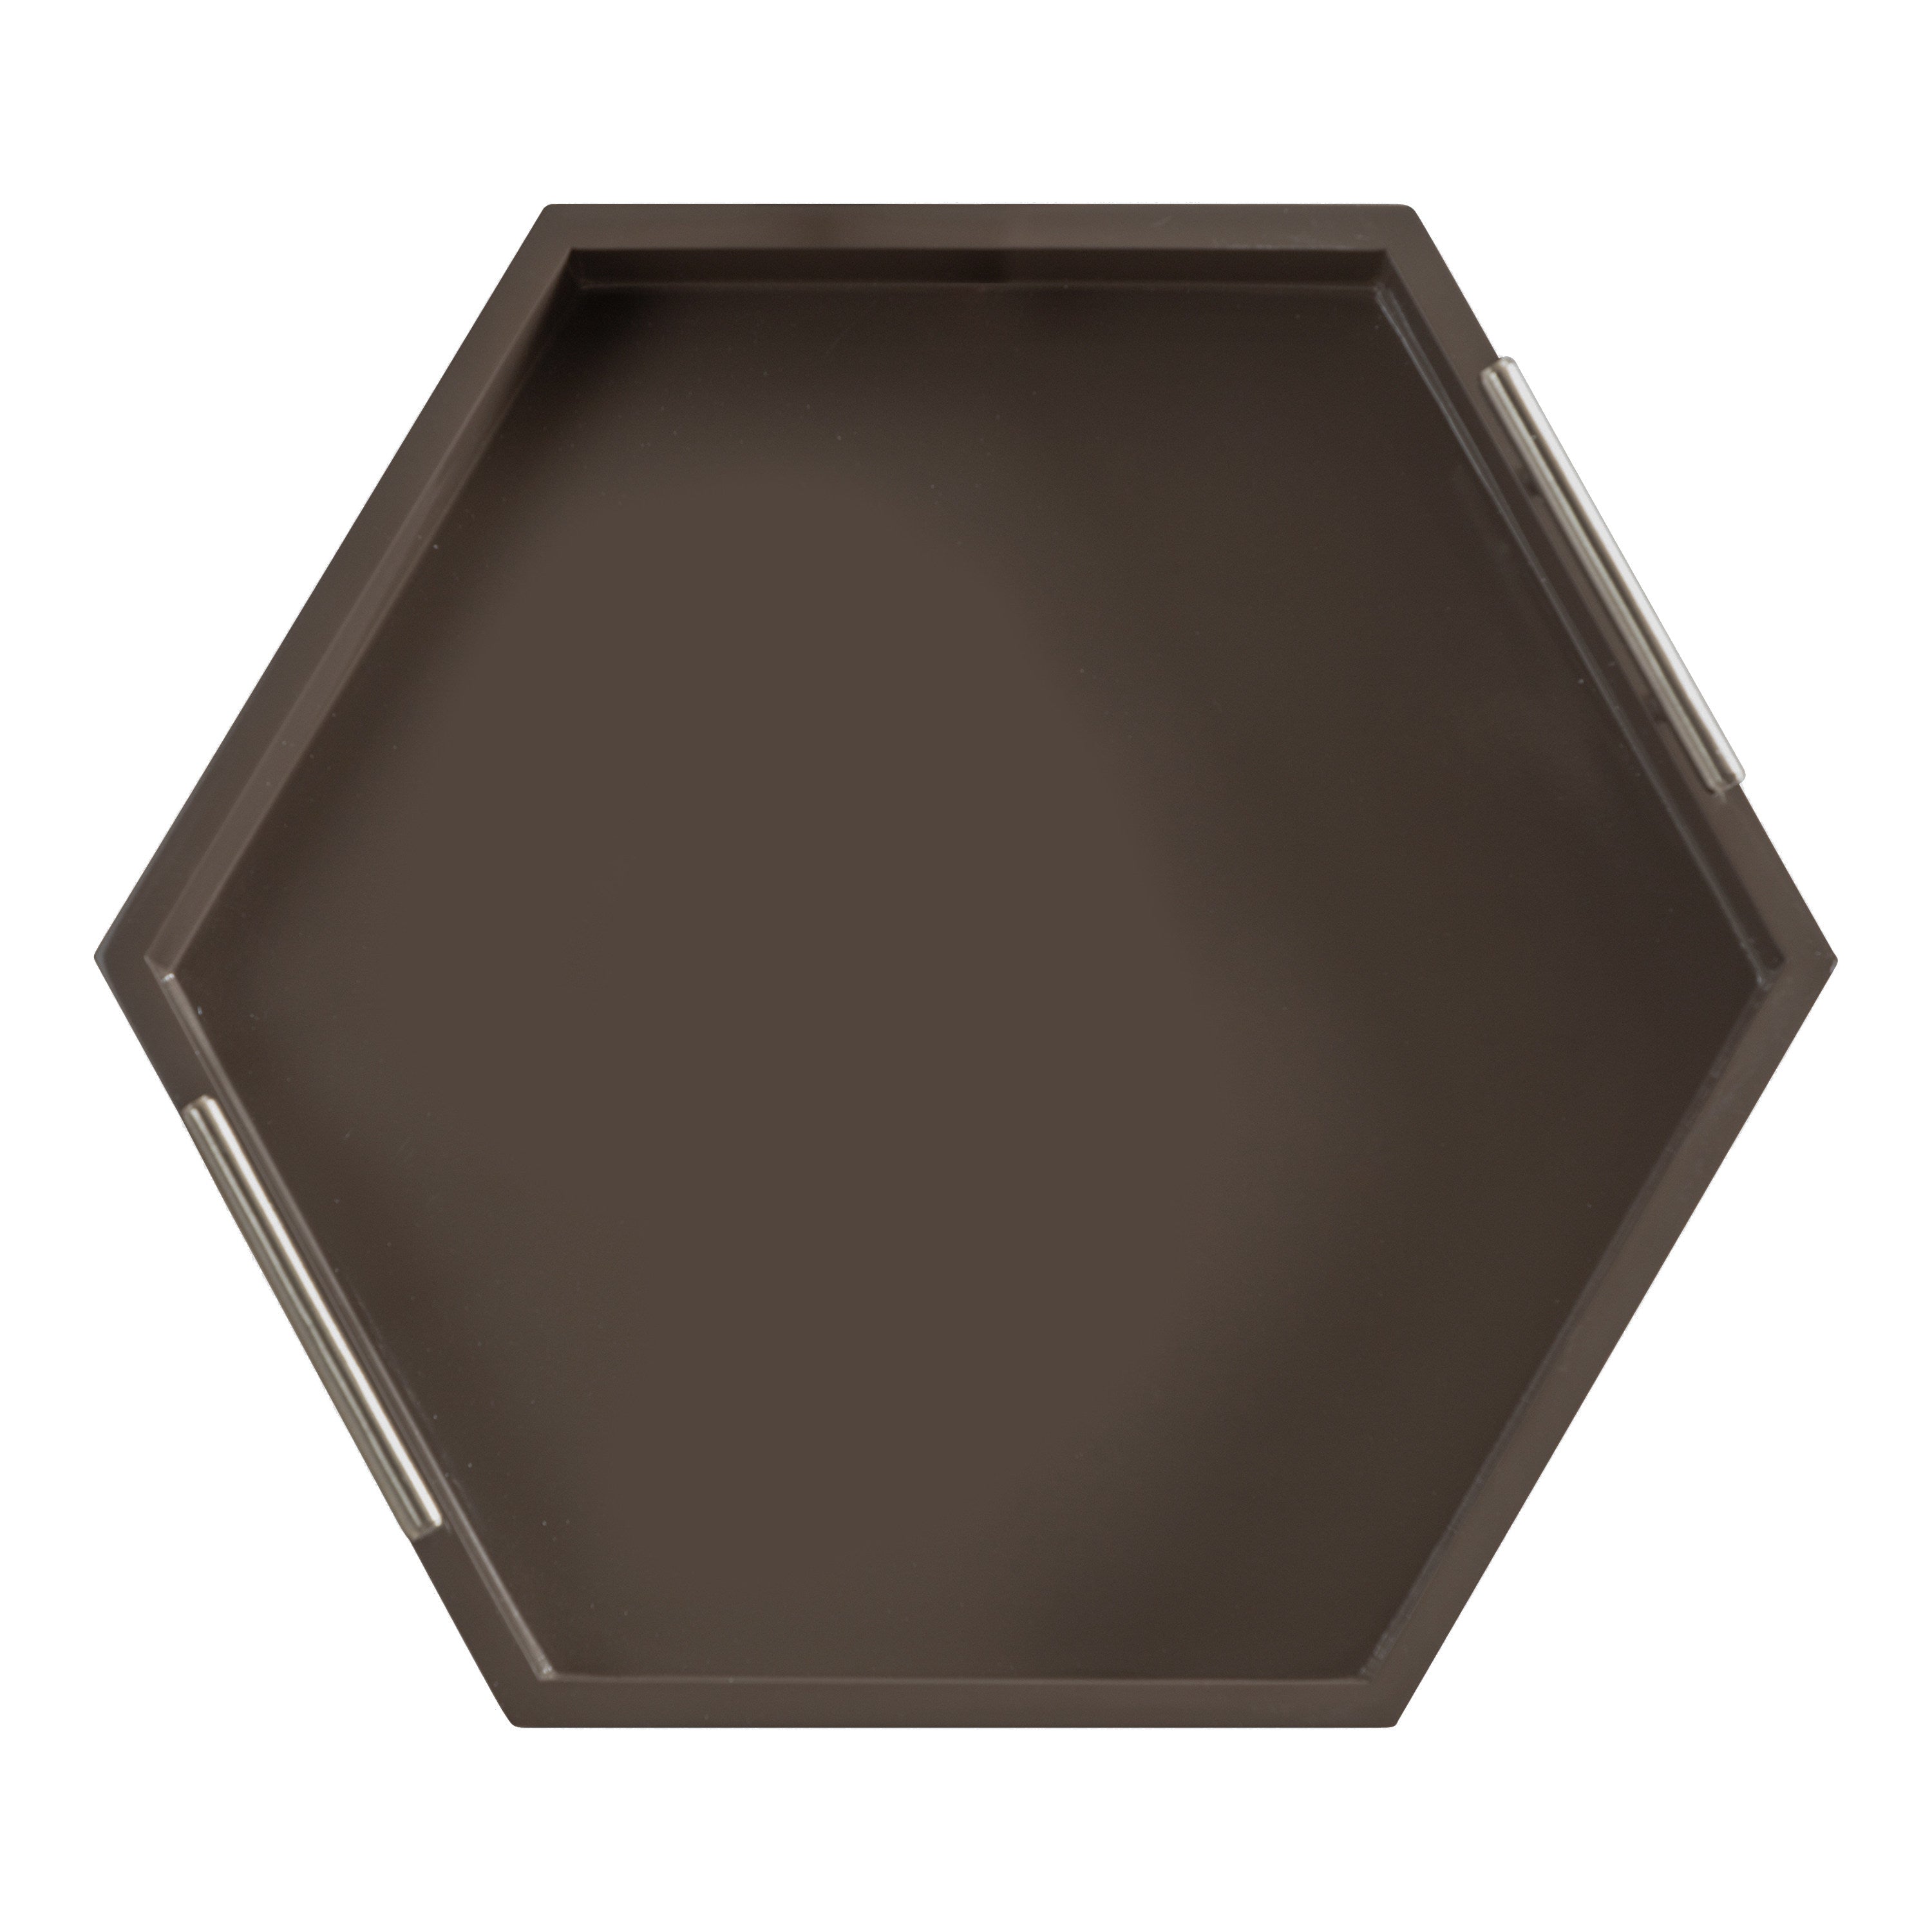 Lipton Hexagon Decorative Tray with Metal Handles